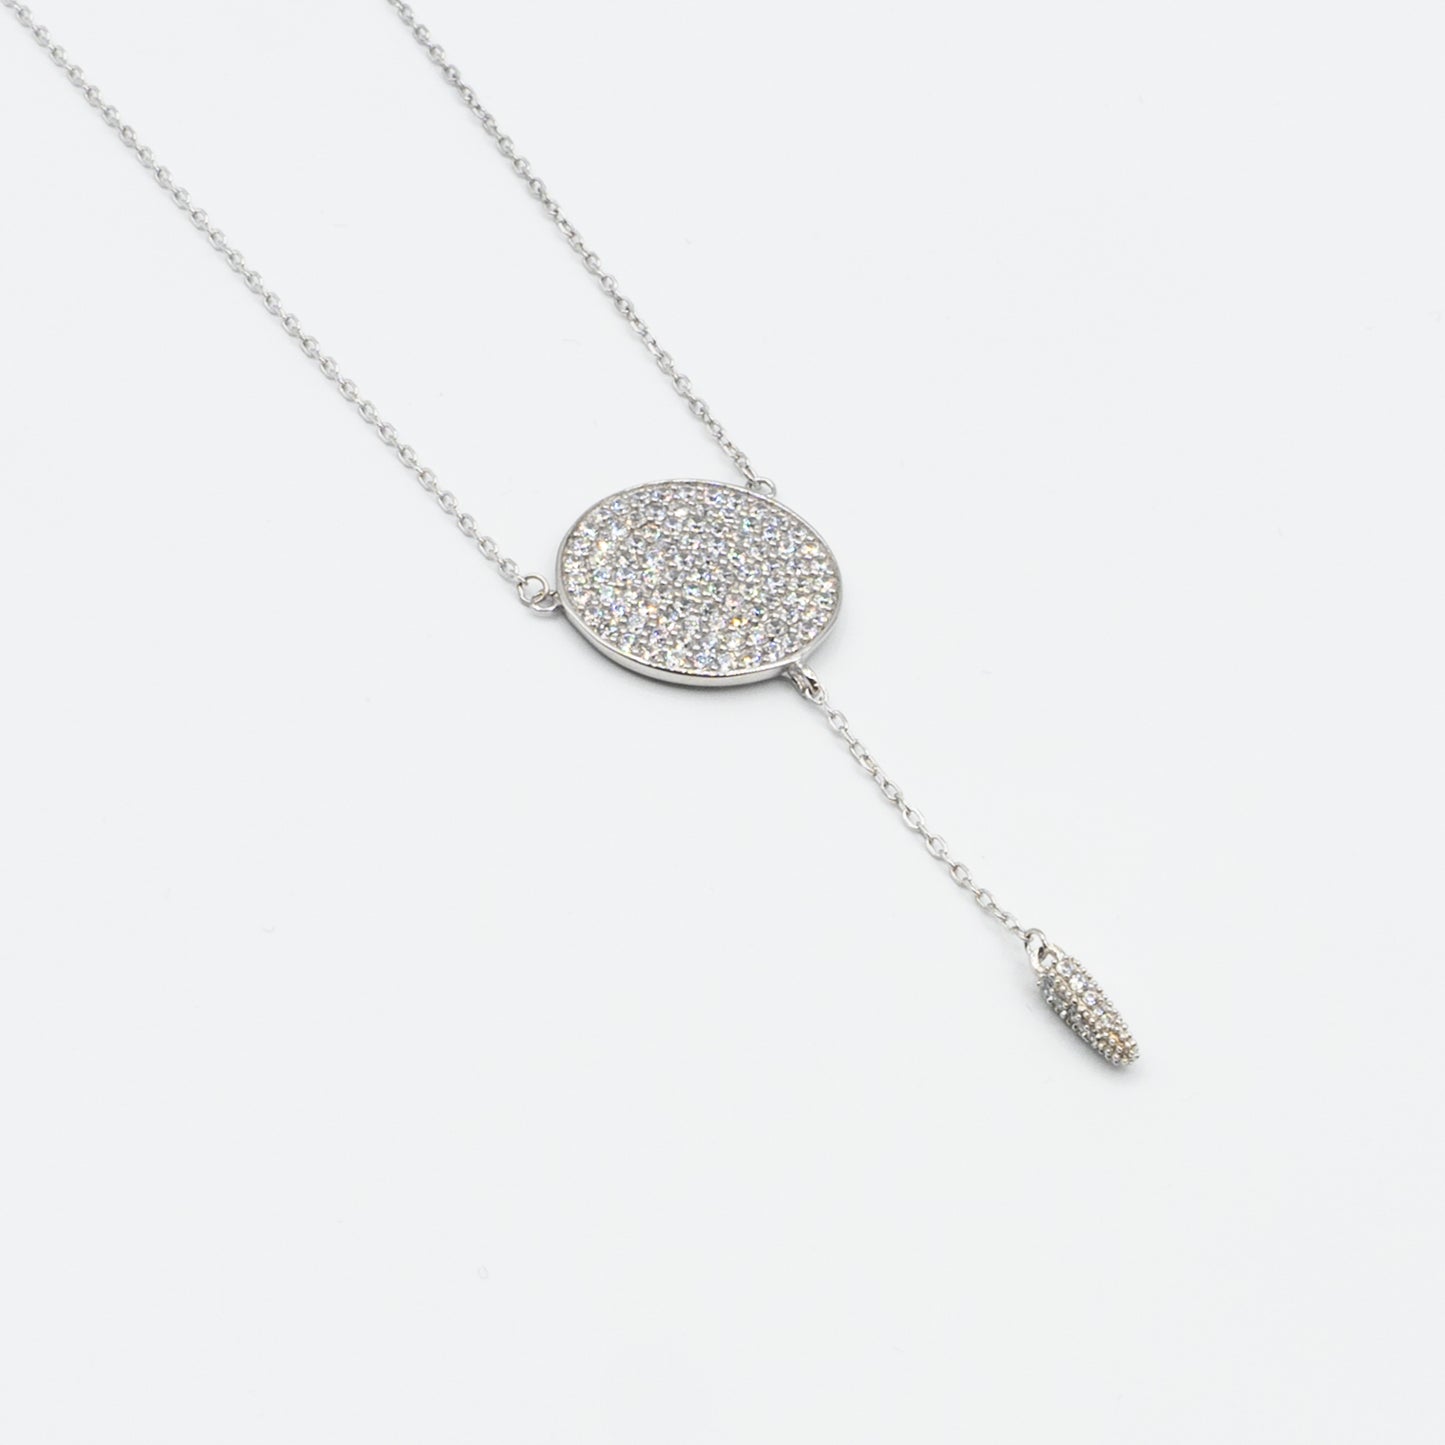 JOANNE sterling silver necklace